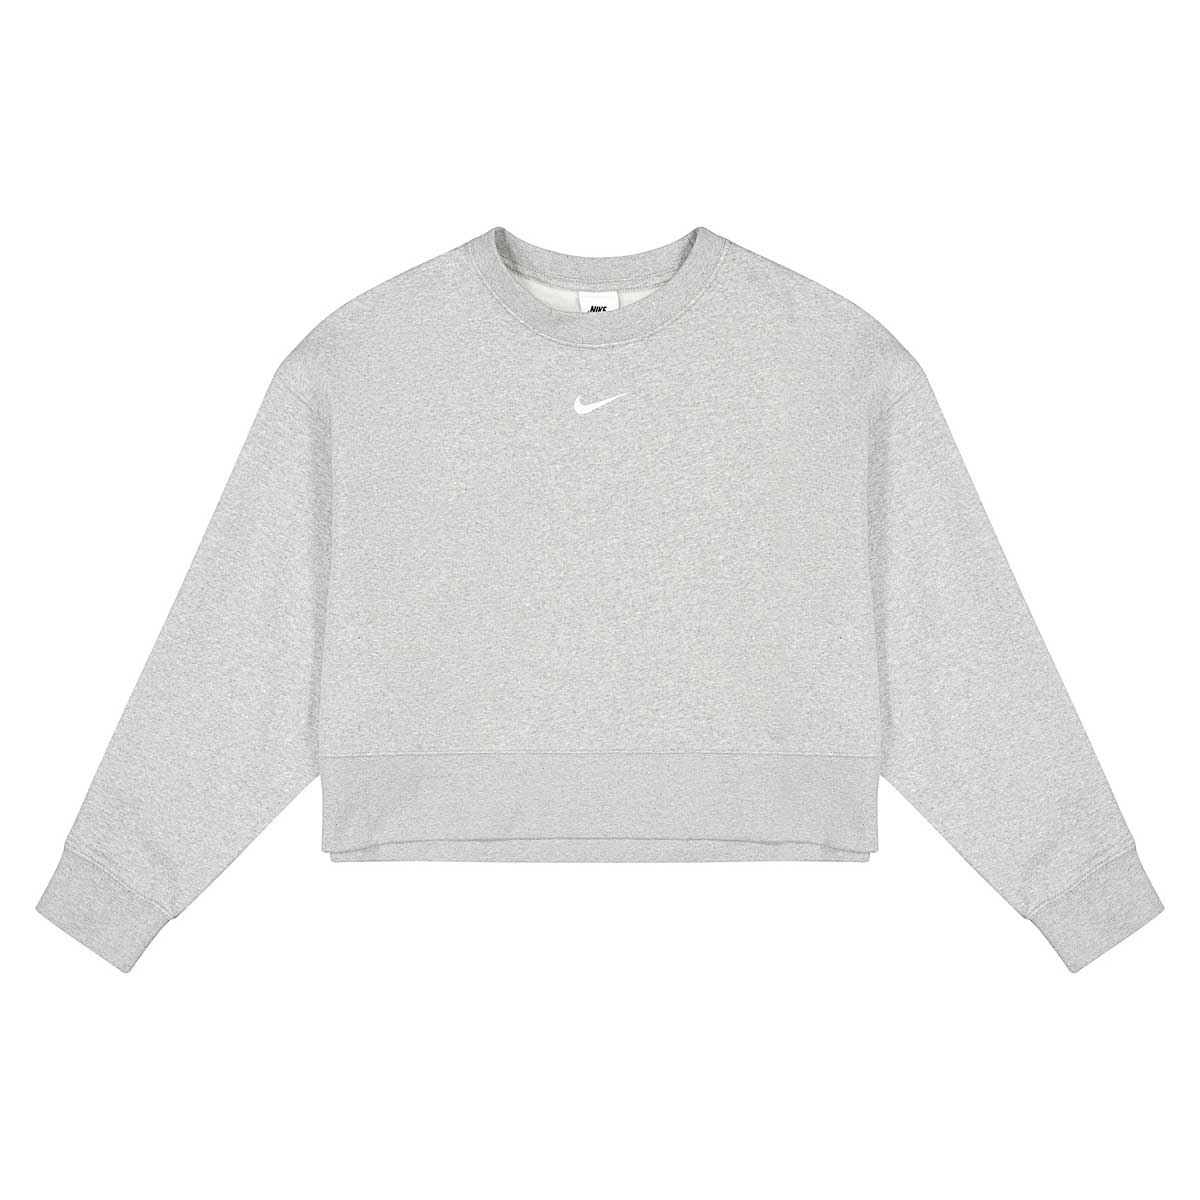 Nike W Nsw Essential Clctn Fleece Os Crw, Dk Grey Heather/Base Grey/White